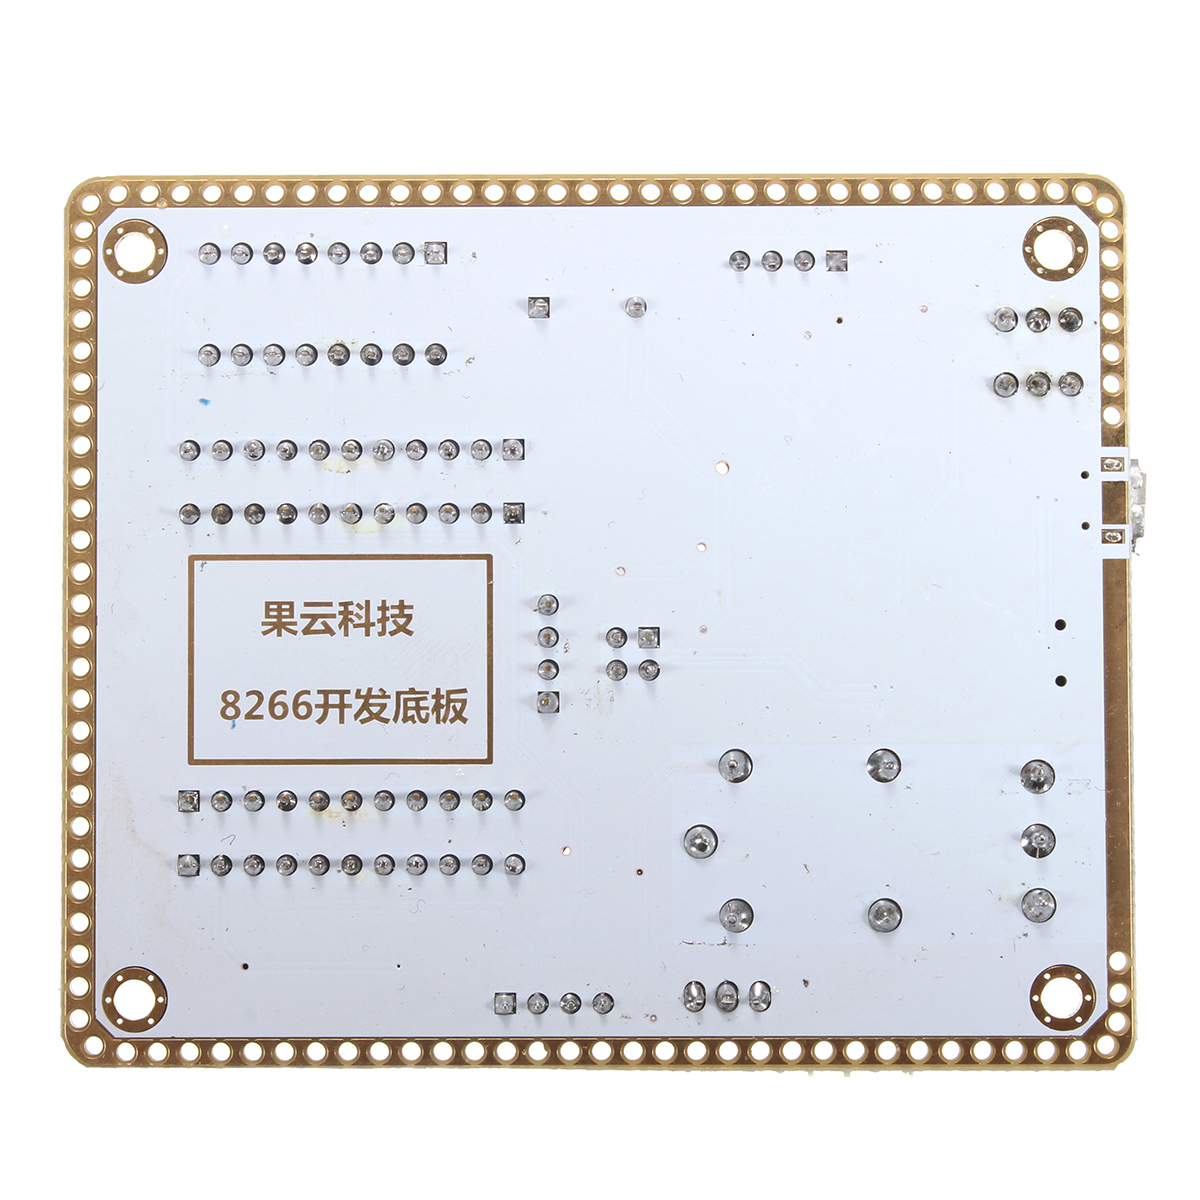 ced72546-04c7-47de-ac9c-a3ac8d5eab74 ESP8266 SDK Serial Wireless WIFI Development Module Board